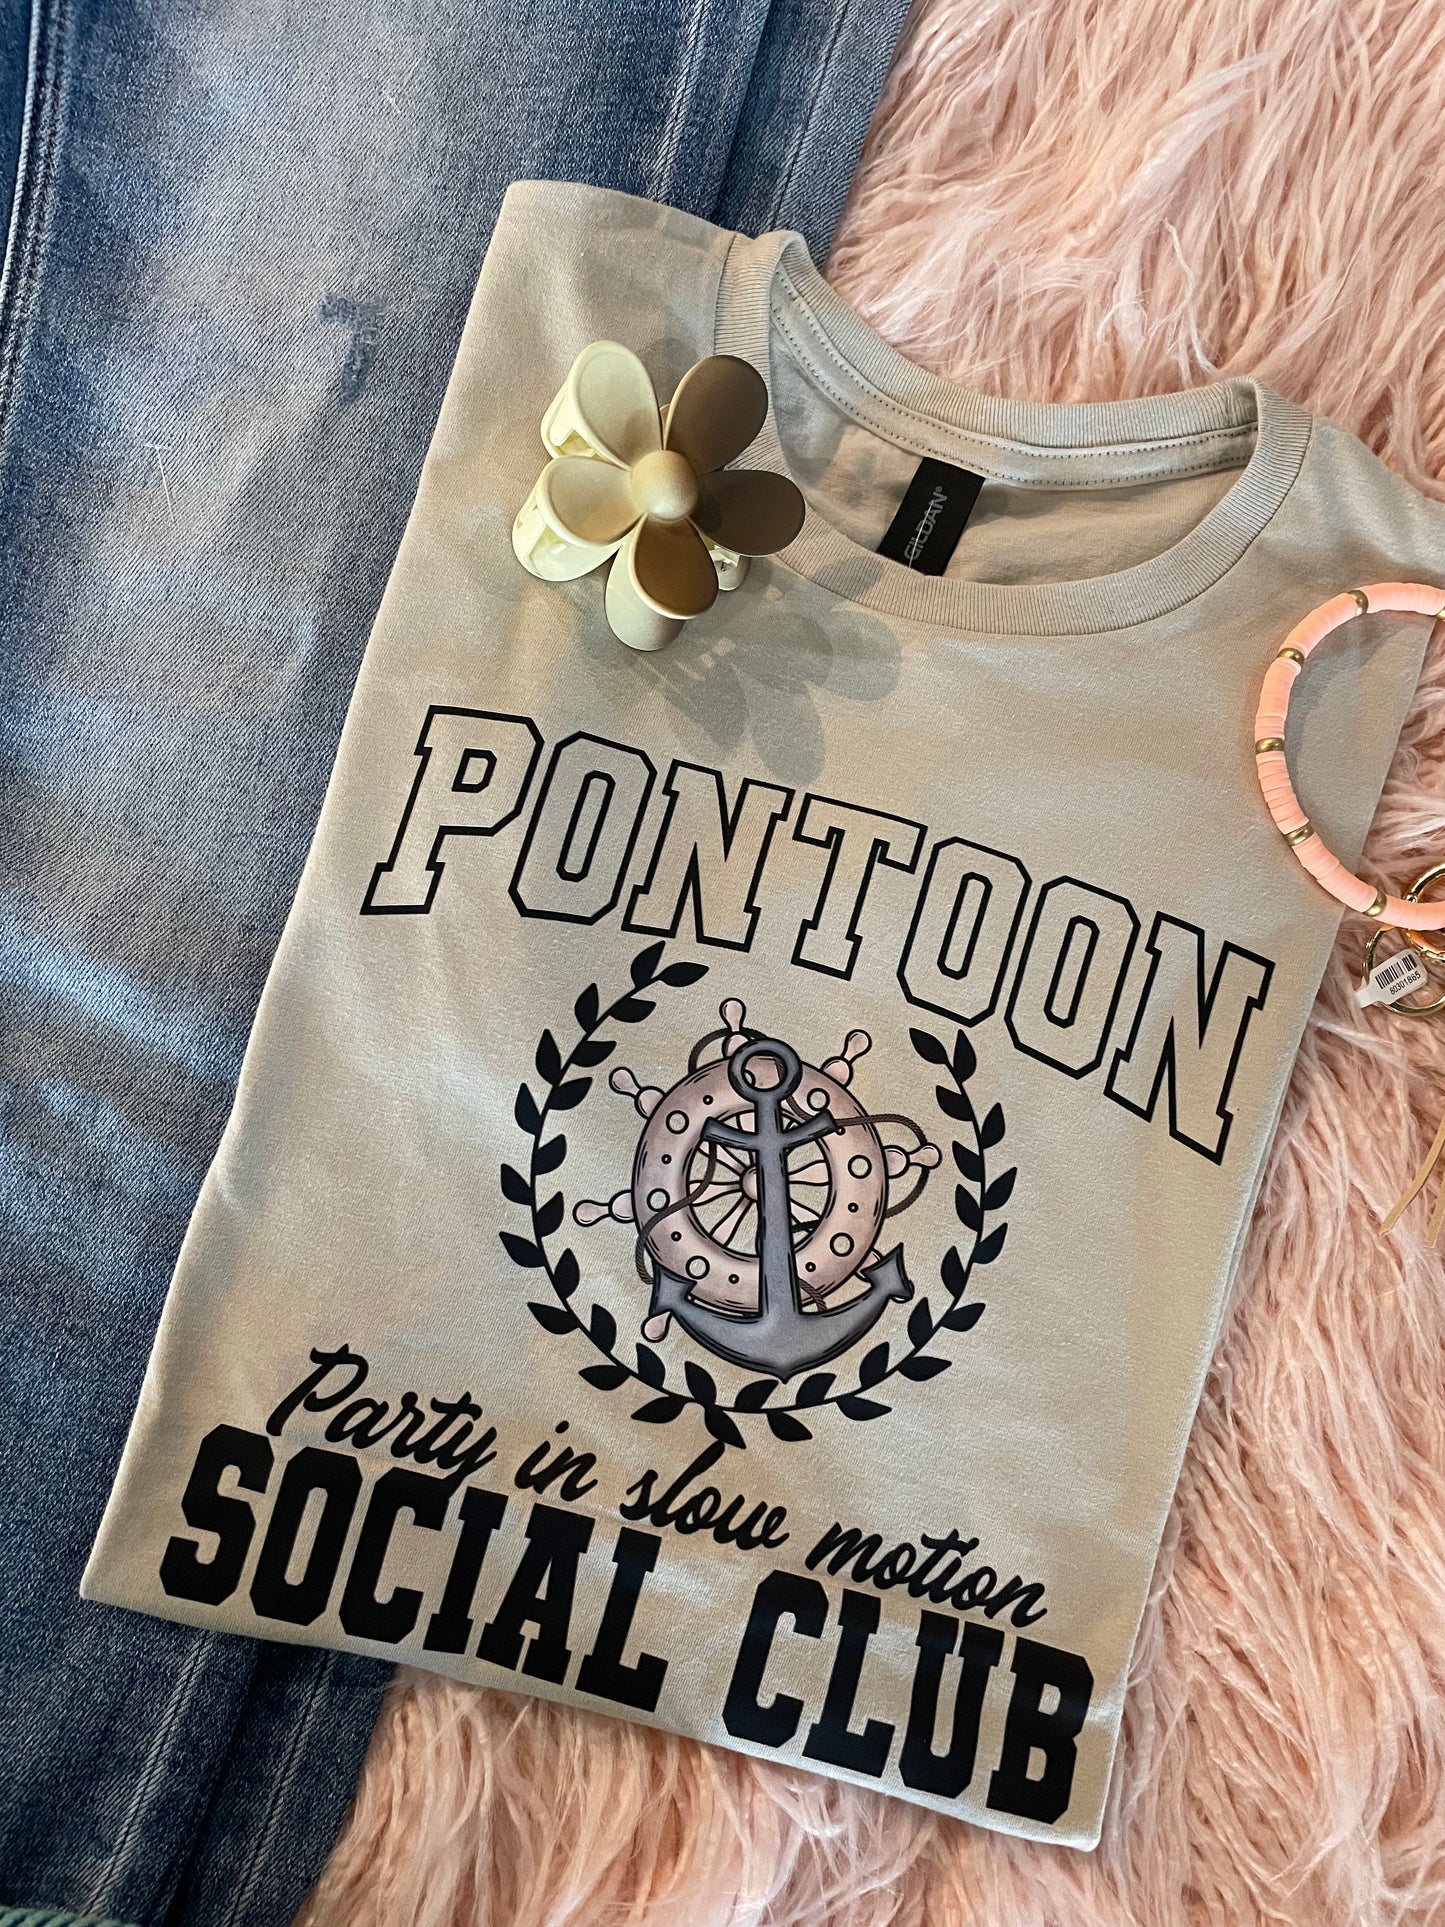 Pontoon Social Club Tee